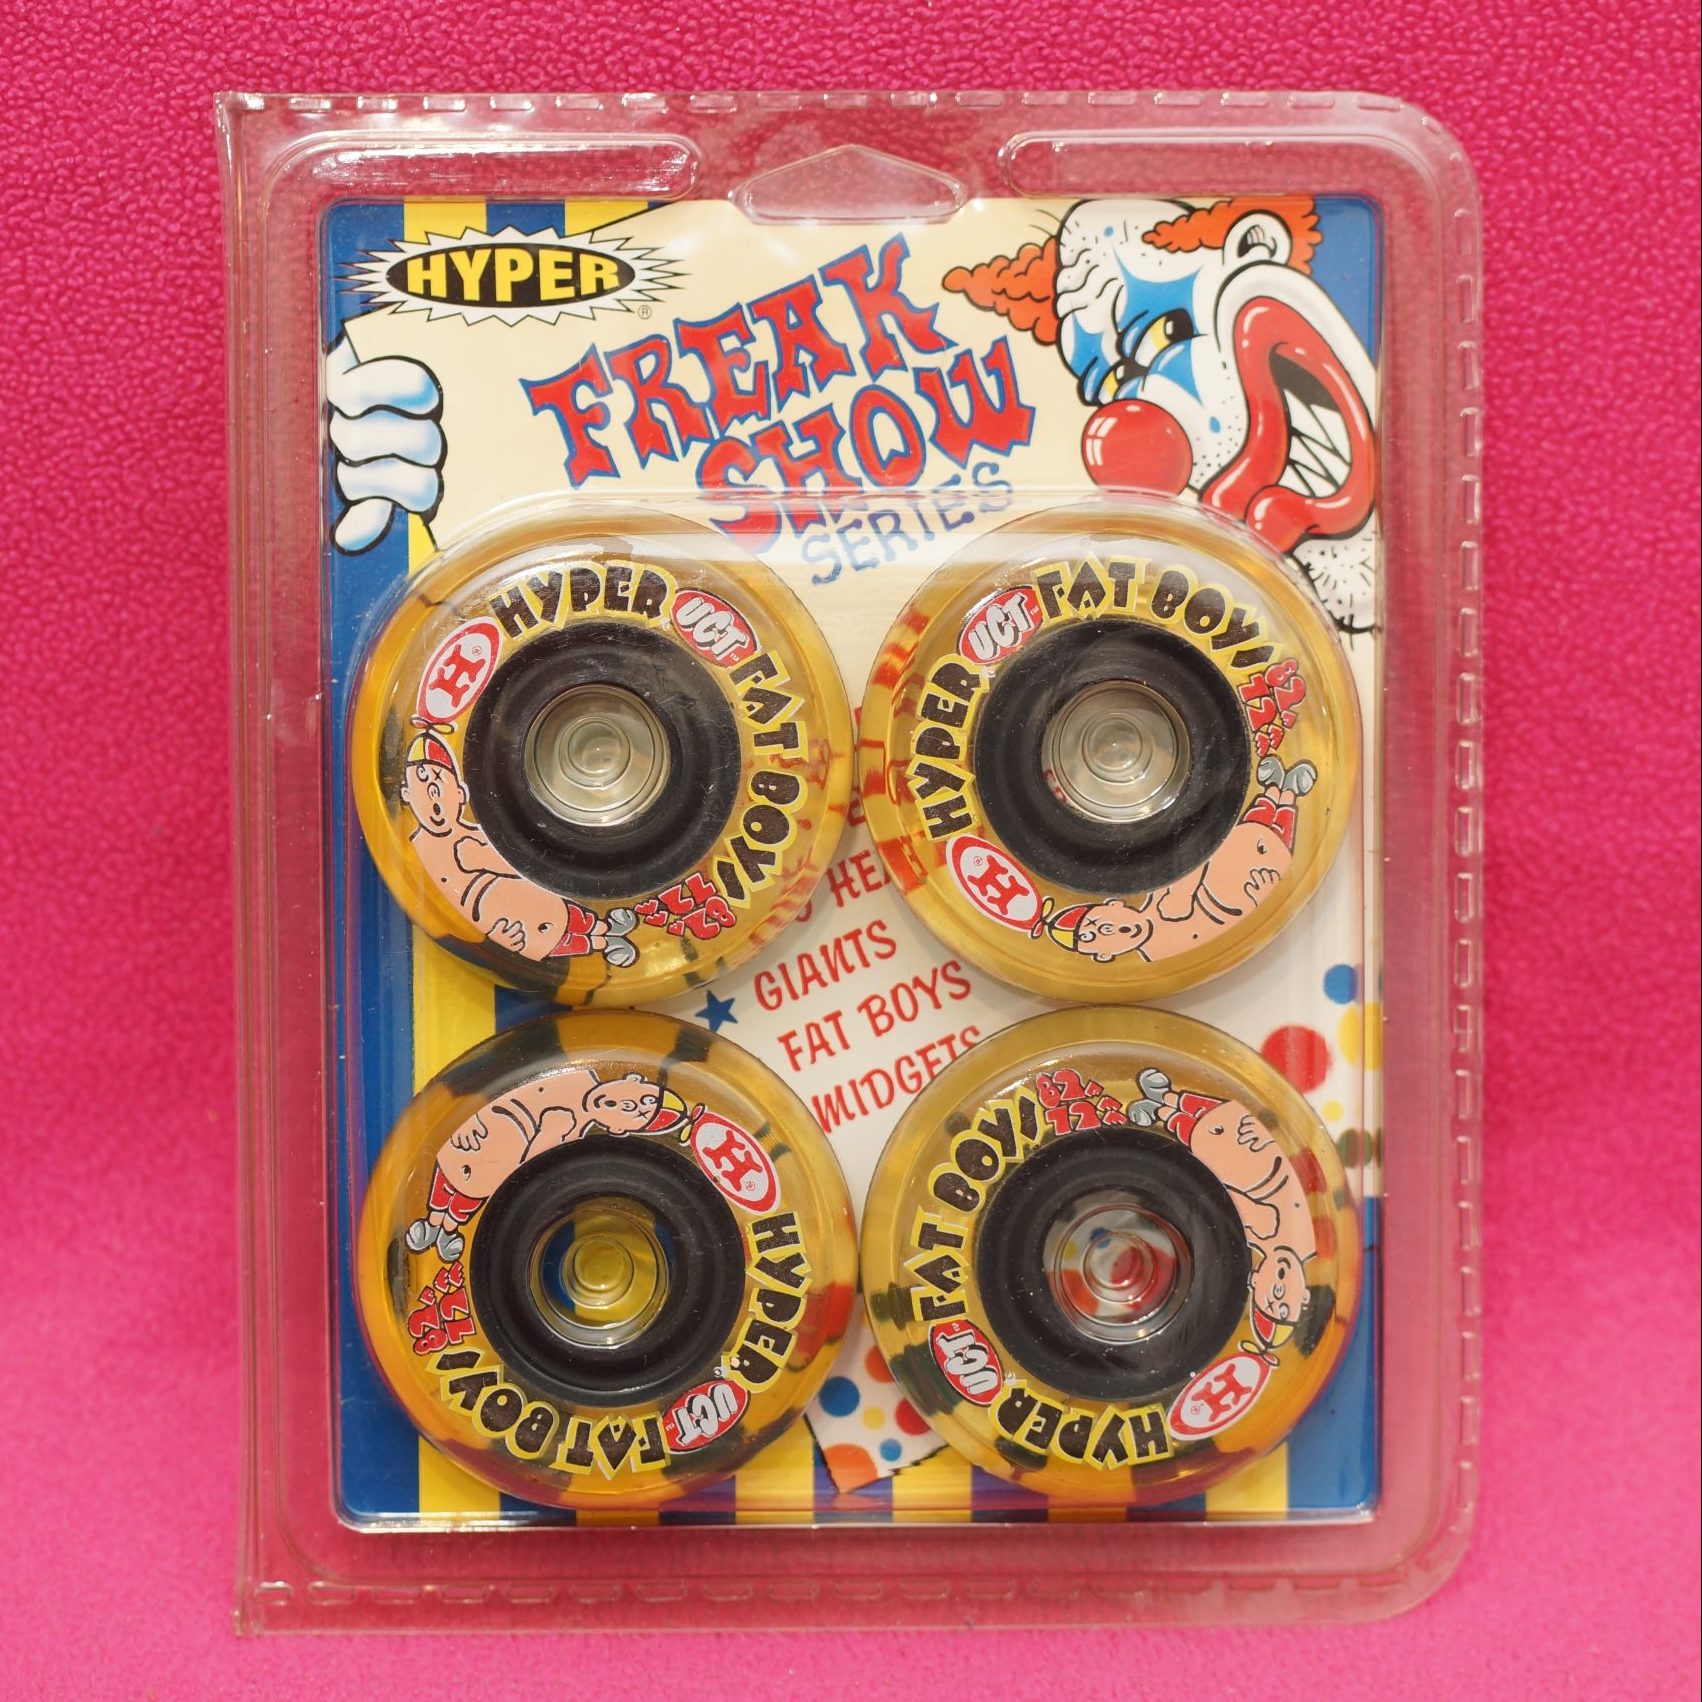 Vintage Hyper Freak Show Series Skate Wheels FAT BOYS 72 MM 